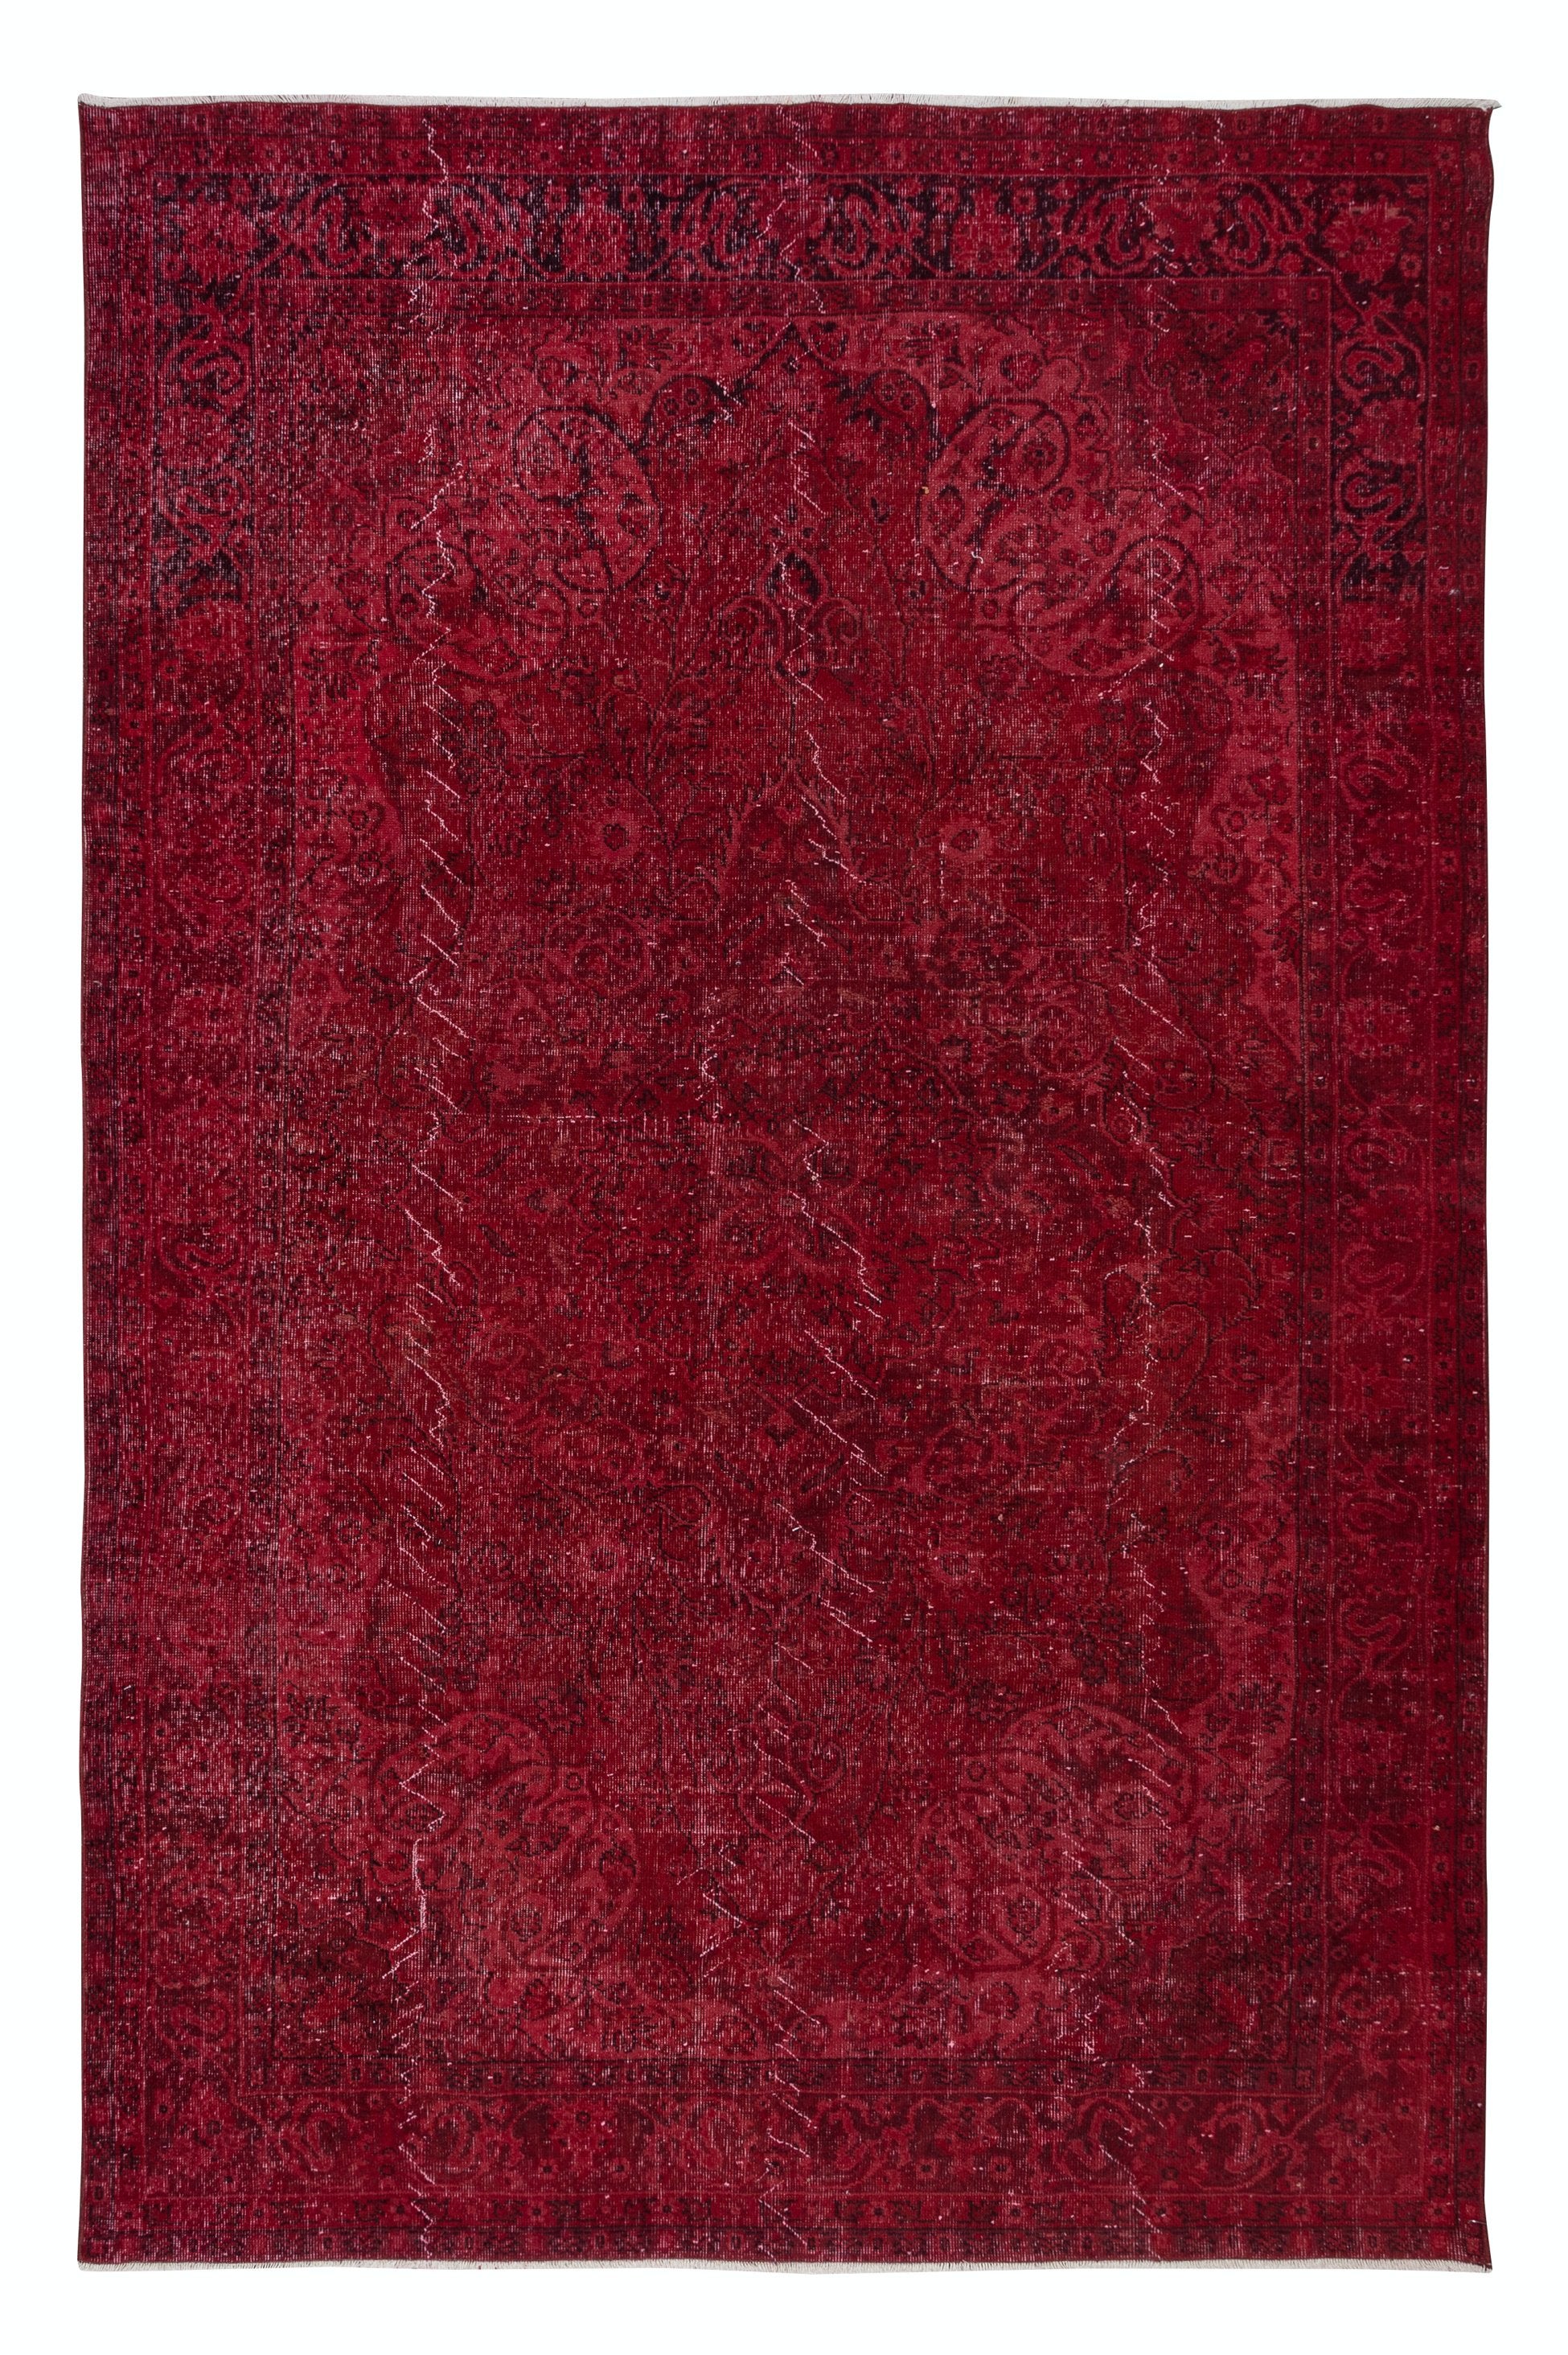 7x10.4 Ft Unique Handmade Burgundy Red Rug, Contemporary Turkish Wool Carpet